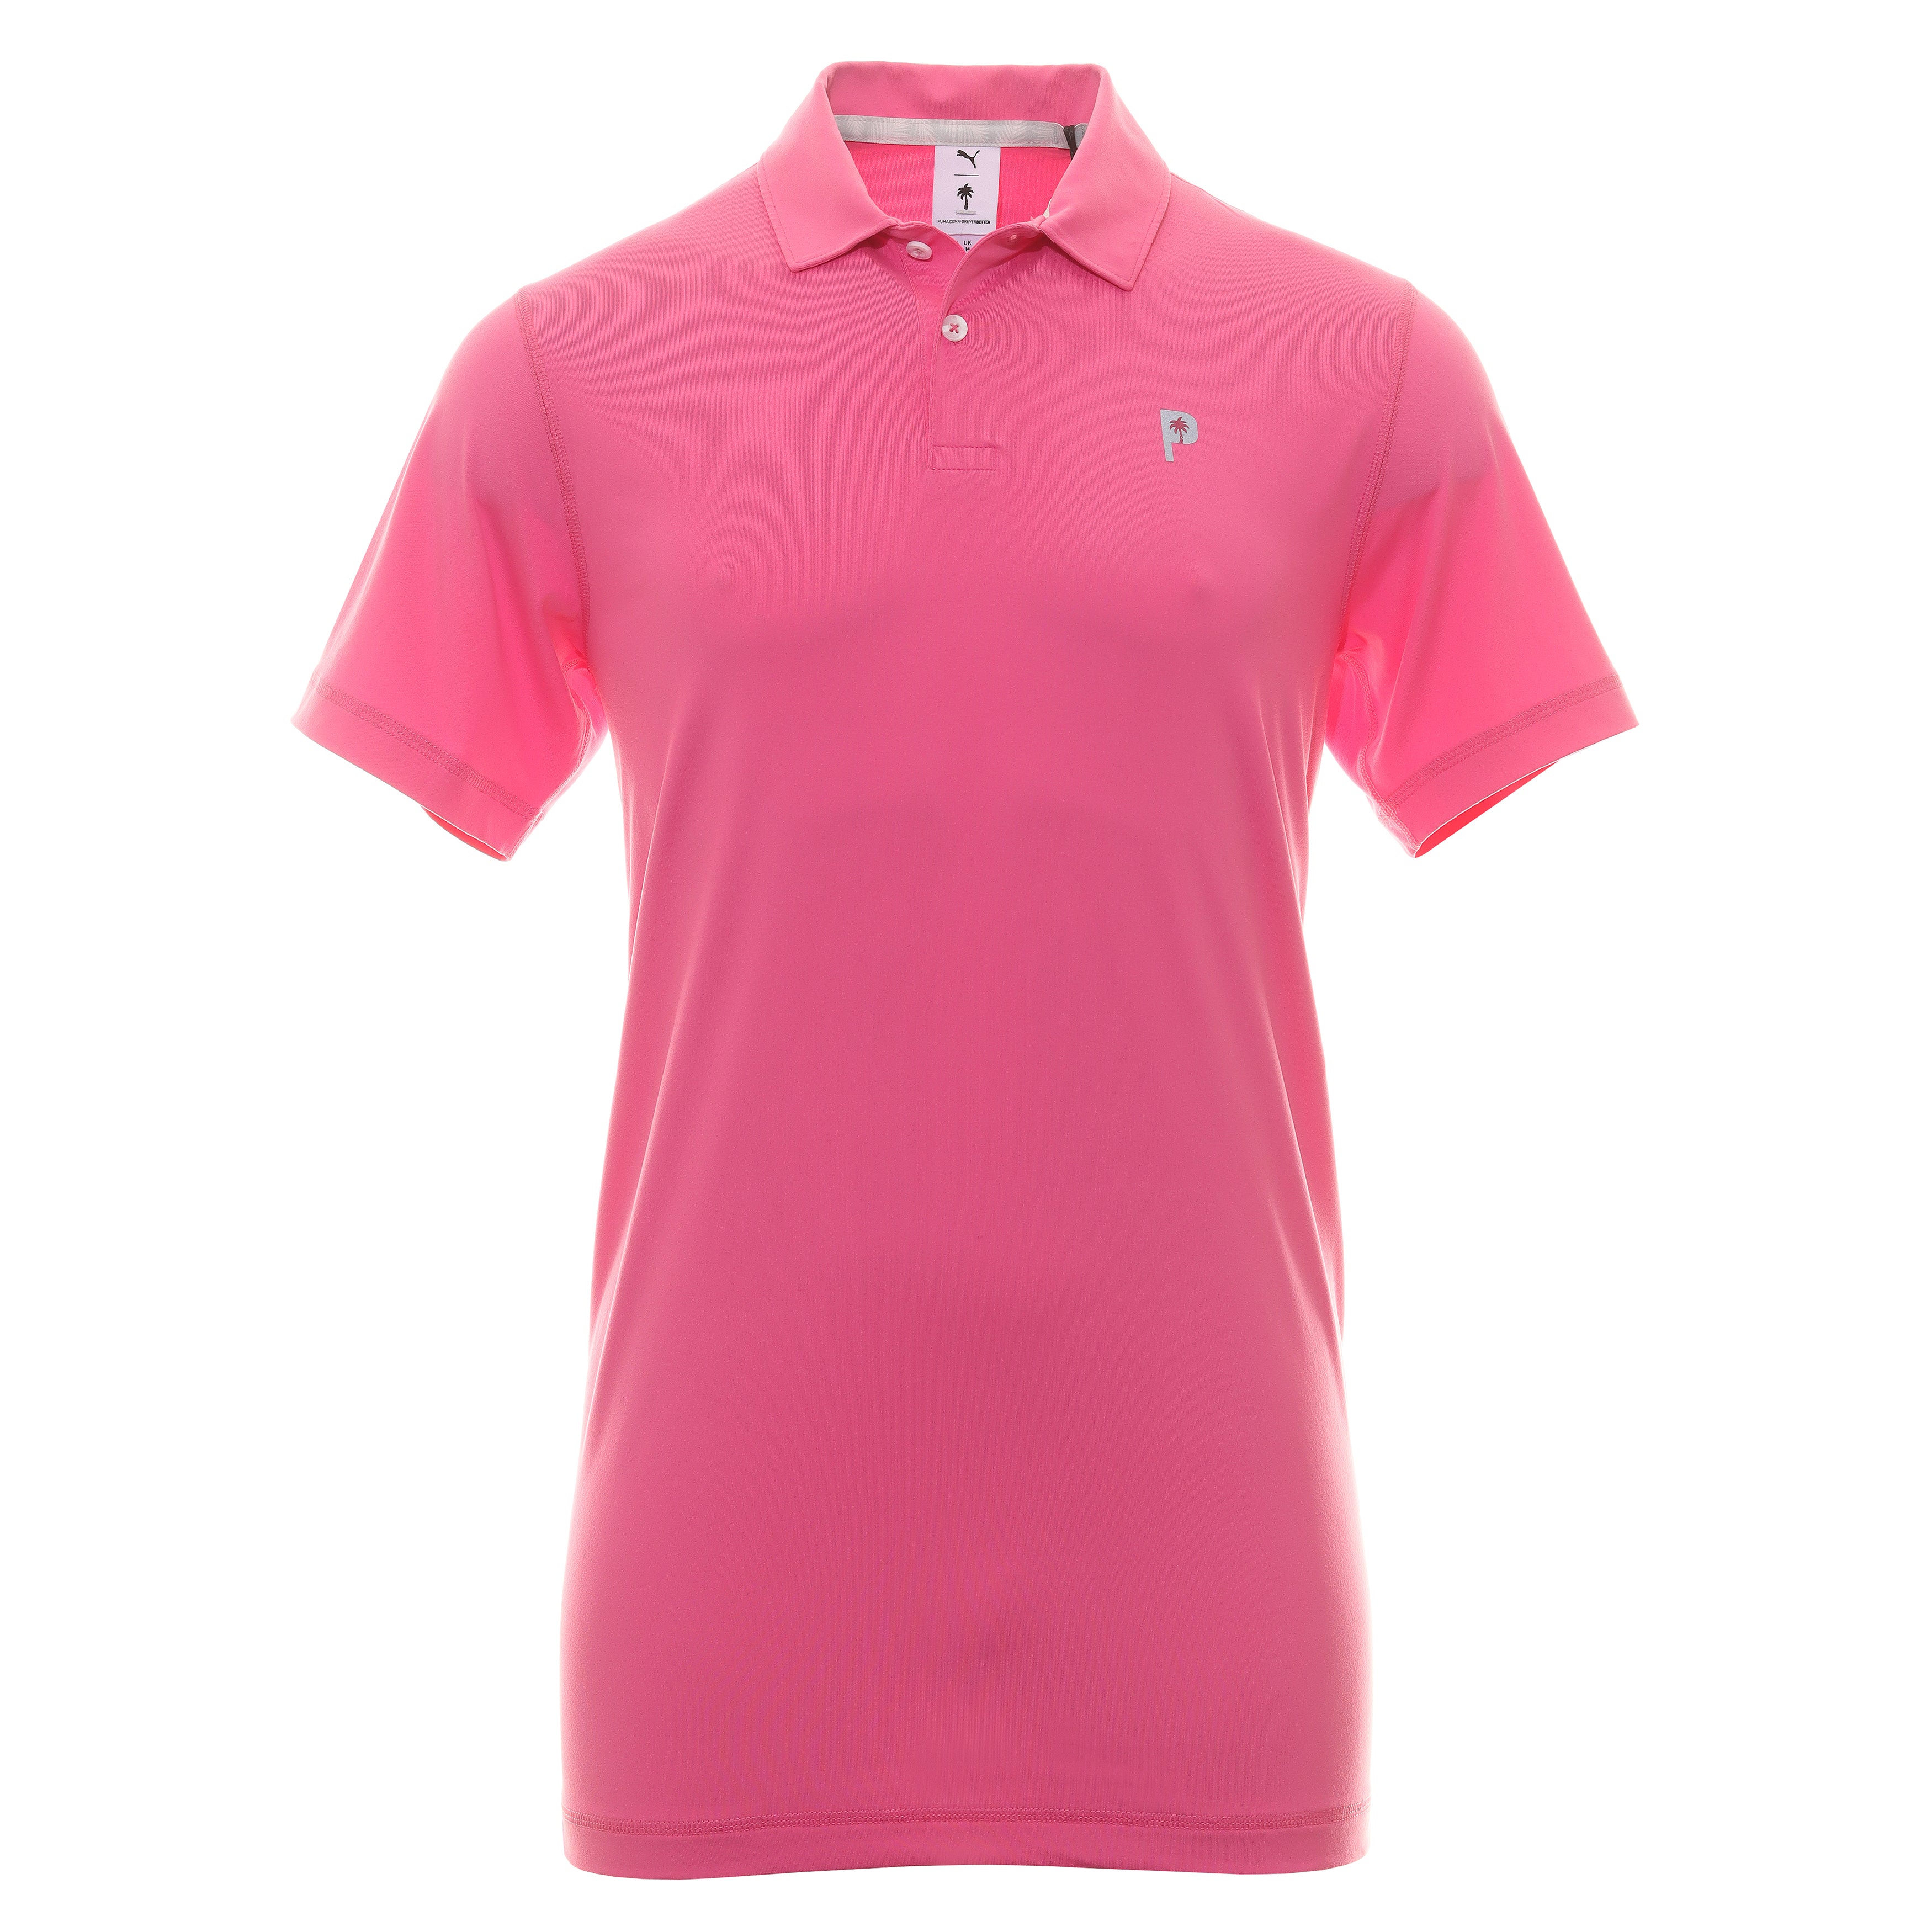 Puma Golf x PTC Shirt 539201 Charming Pink 04 & Function18 | Restrictedgs